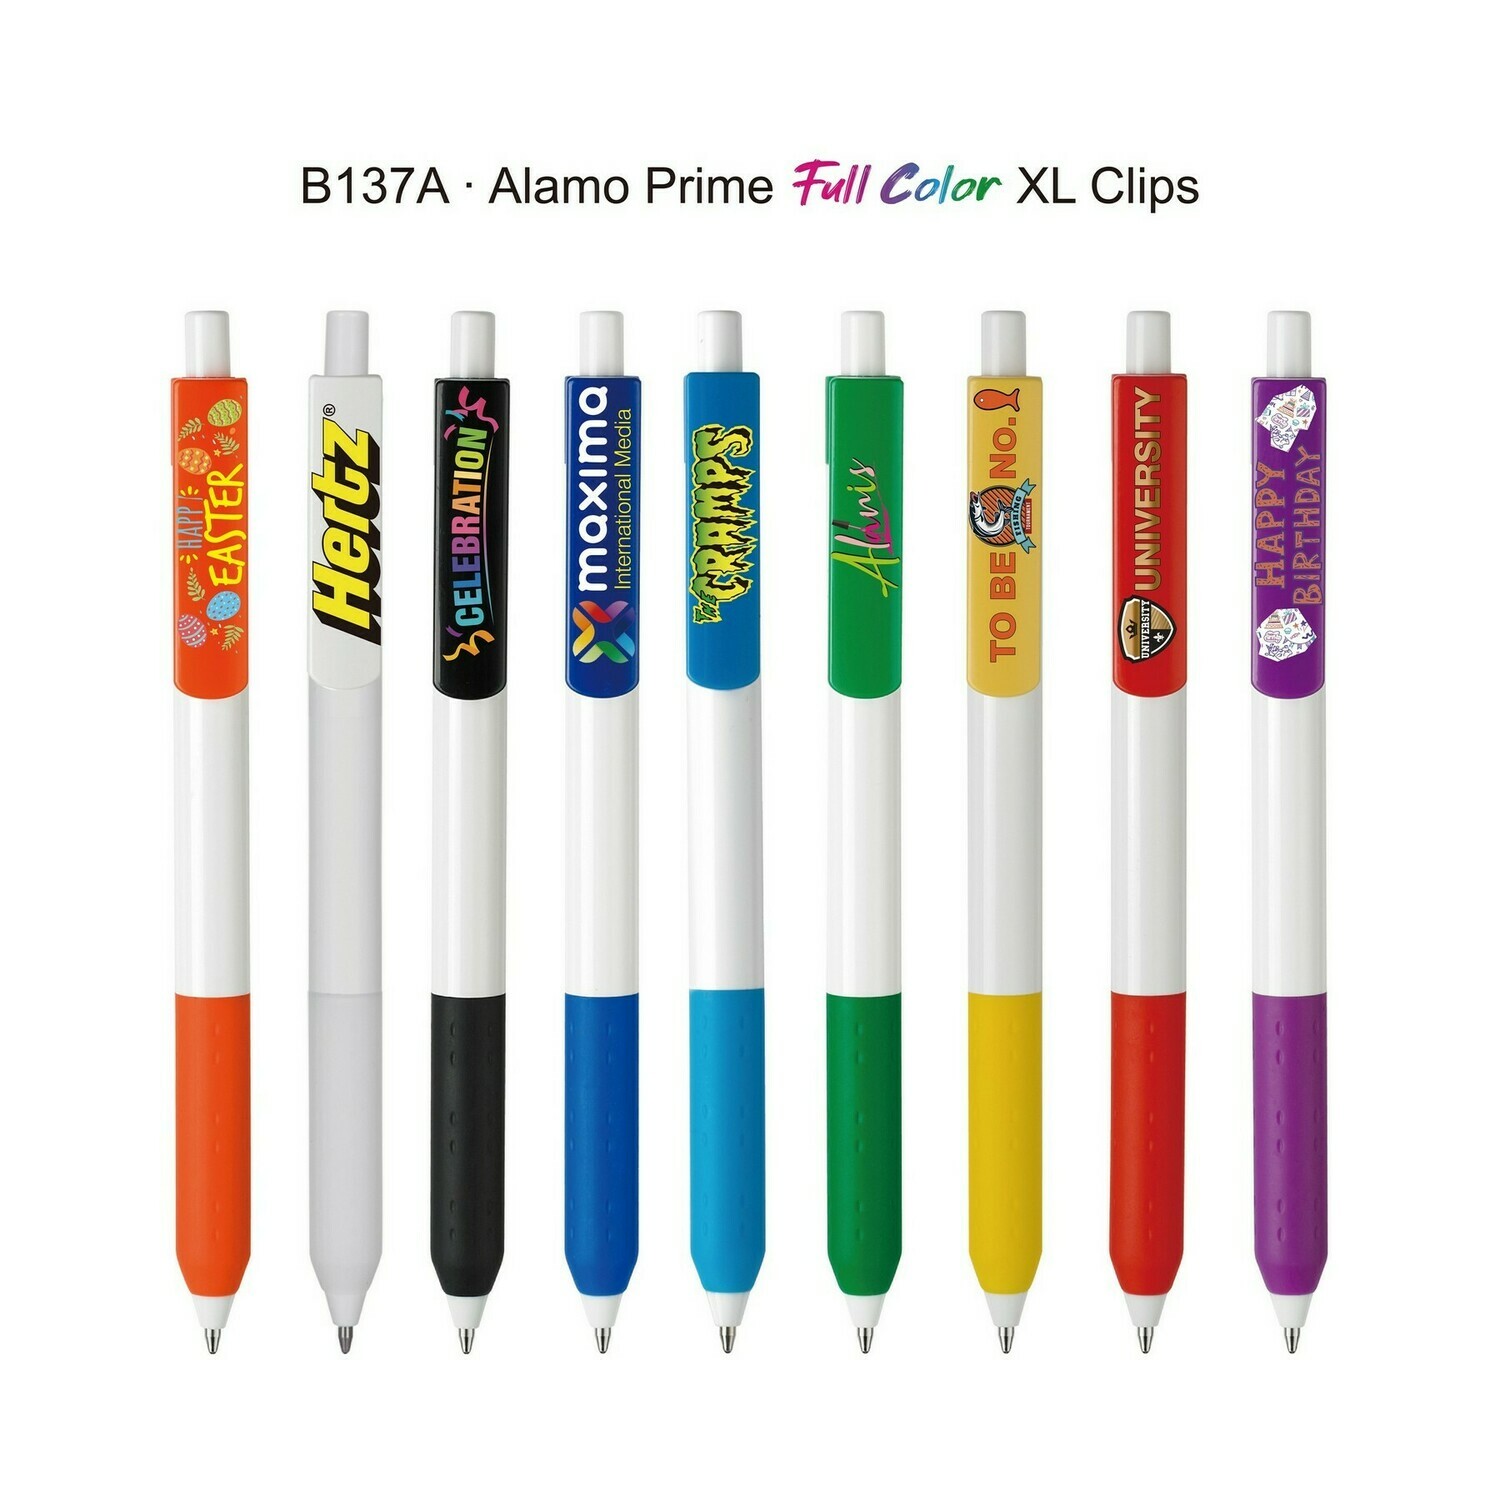 RiteLine Alamo Prime Pen with Full Color XL Clips